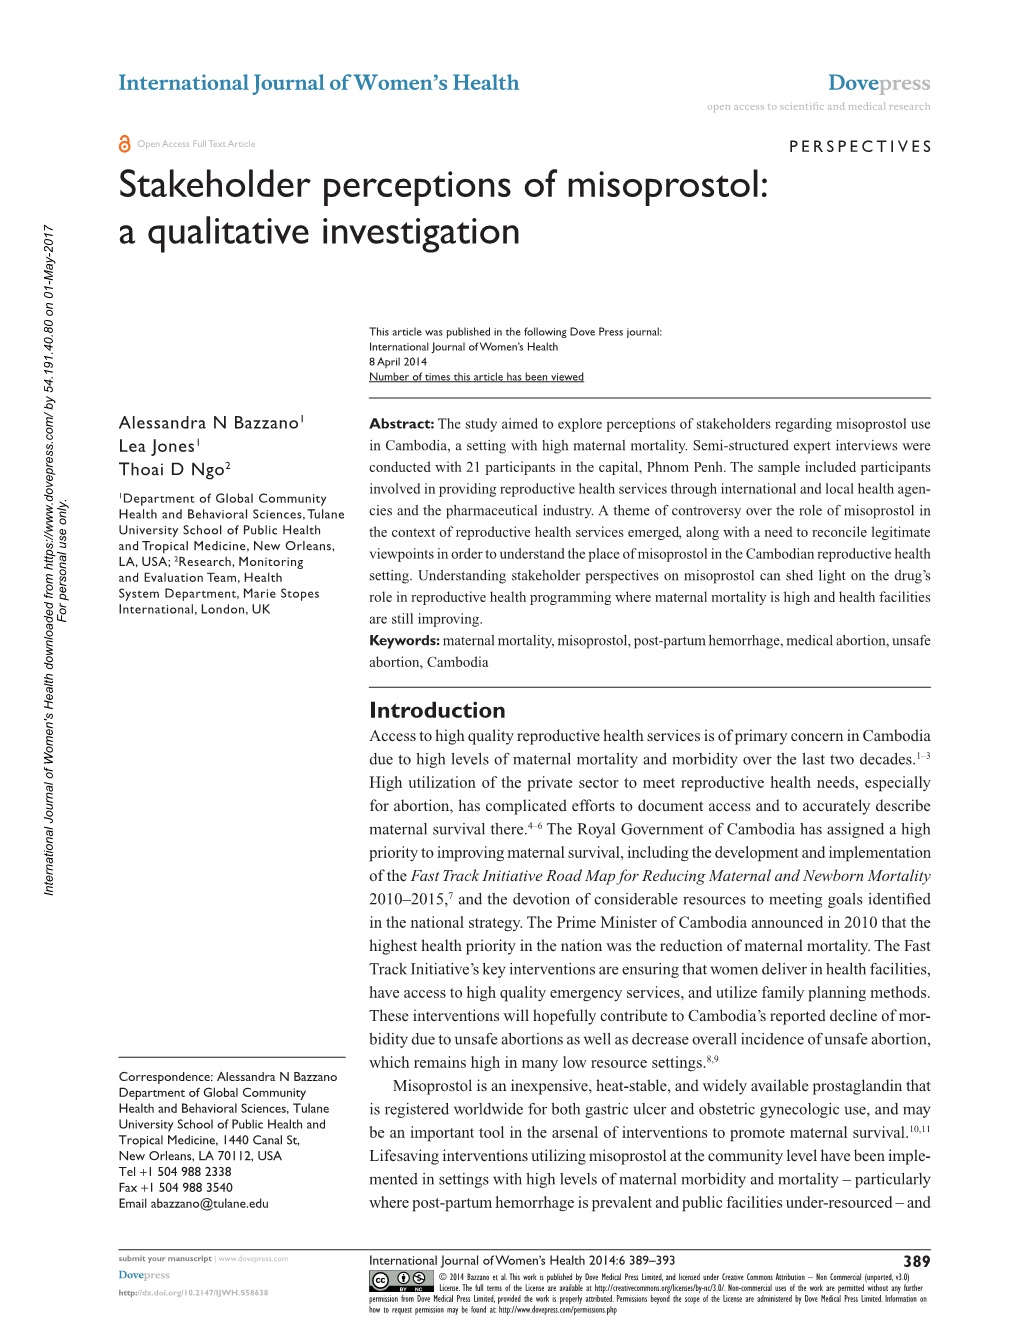 Stakeholder Perceptions of Misoprostol: a Qualitative Investigation